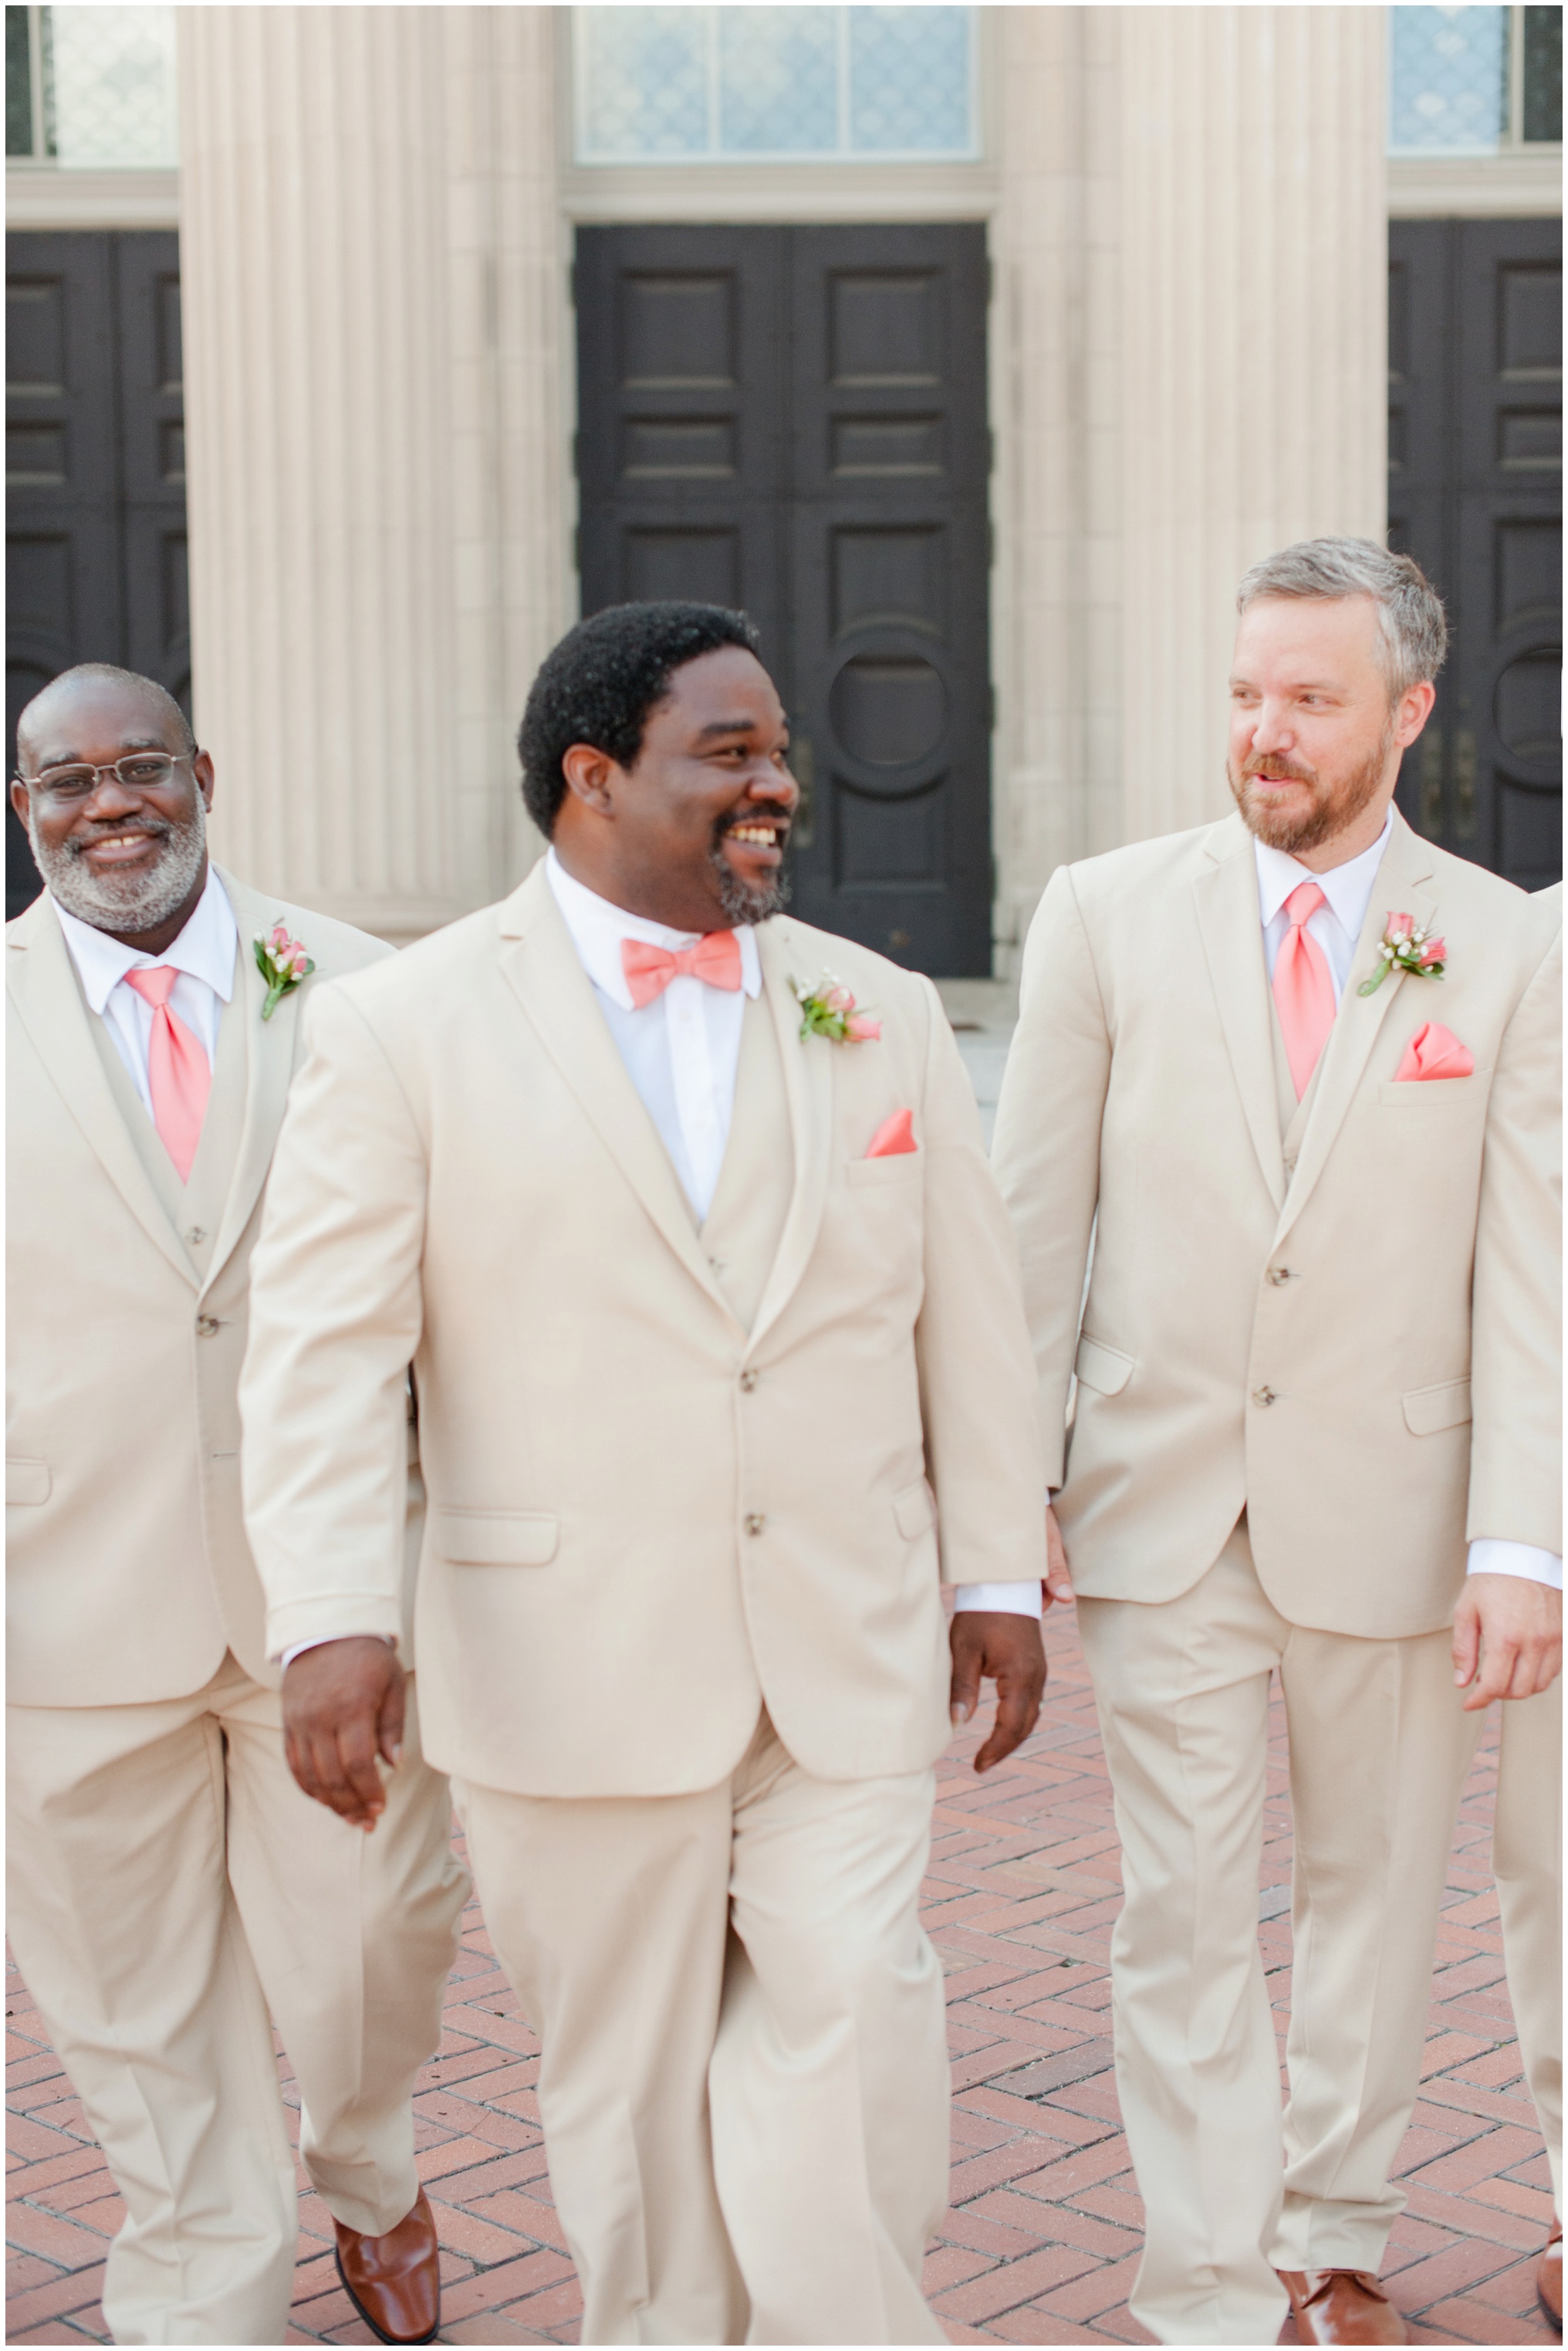 photo of Virginia groomsmen